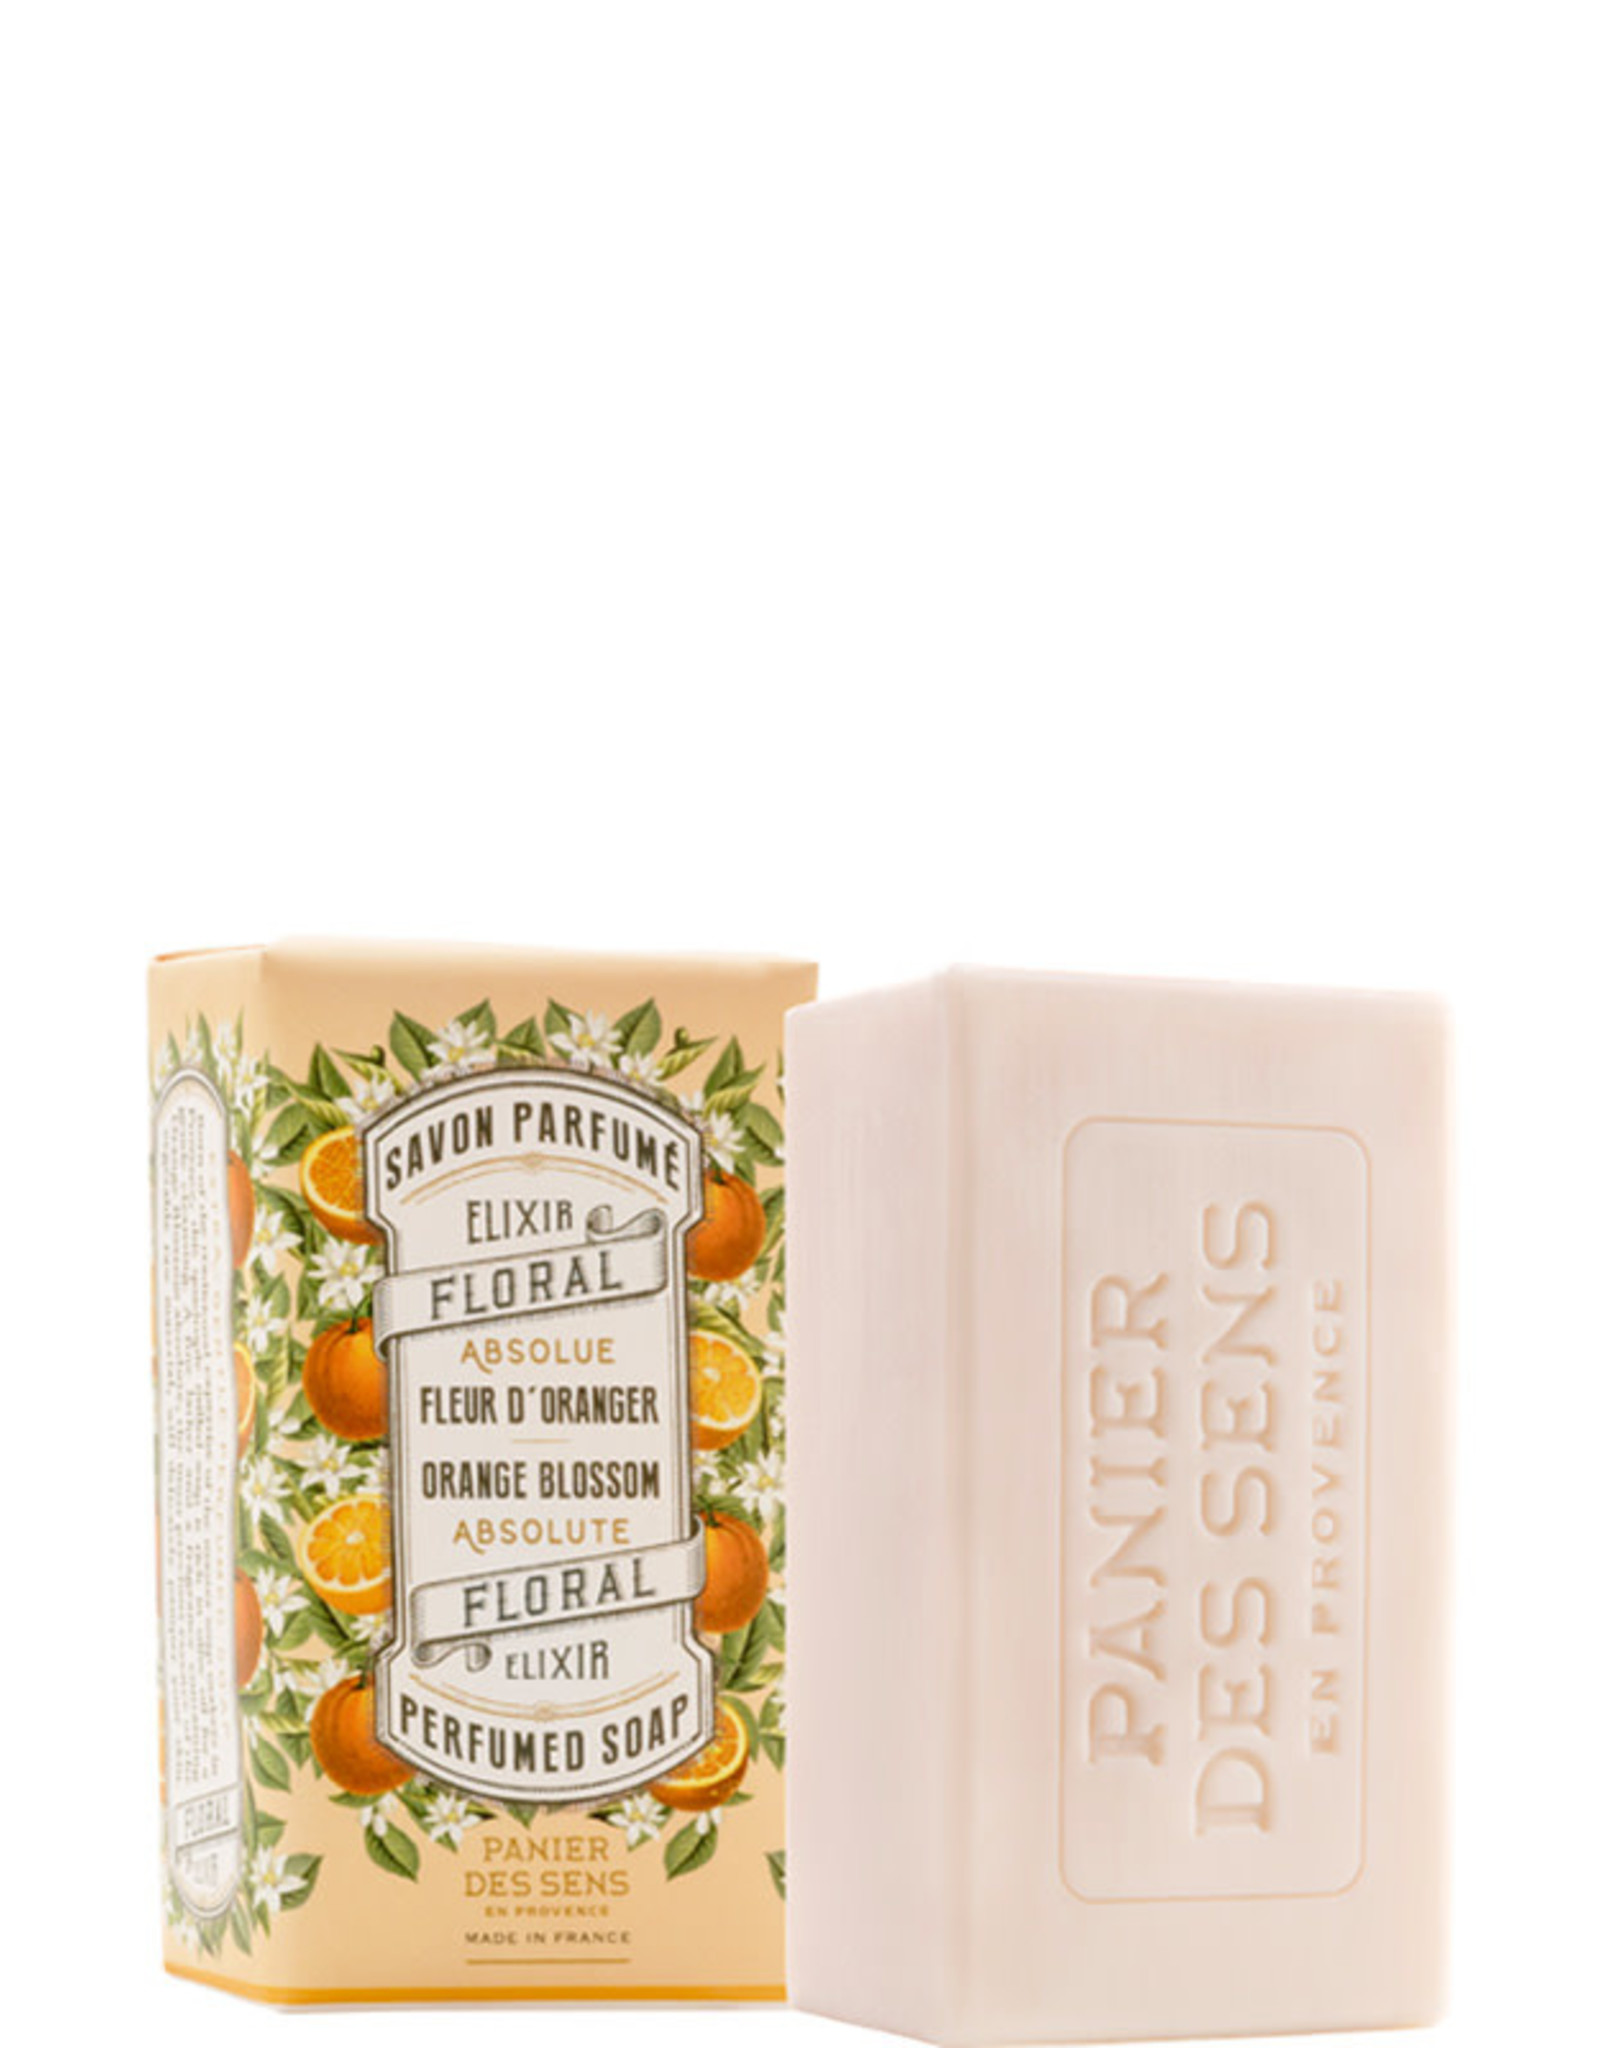 Panier Des Sens Soap Bar  "Absolute Orange Blossom Perfumed Soap"  5.3 oz. -  Panier Des Sens